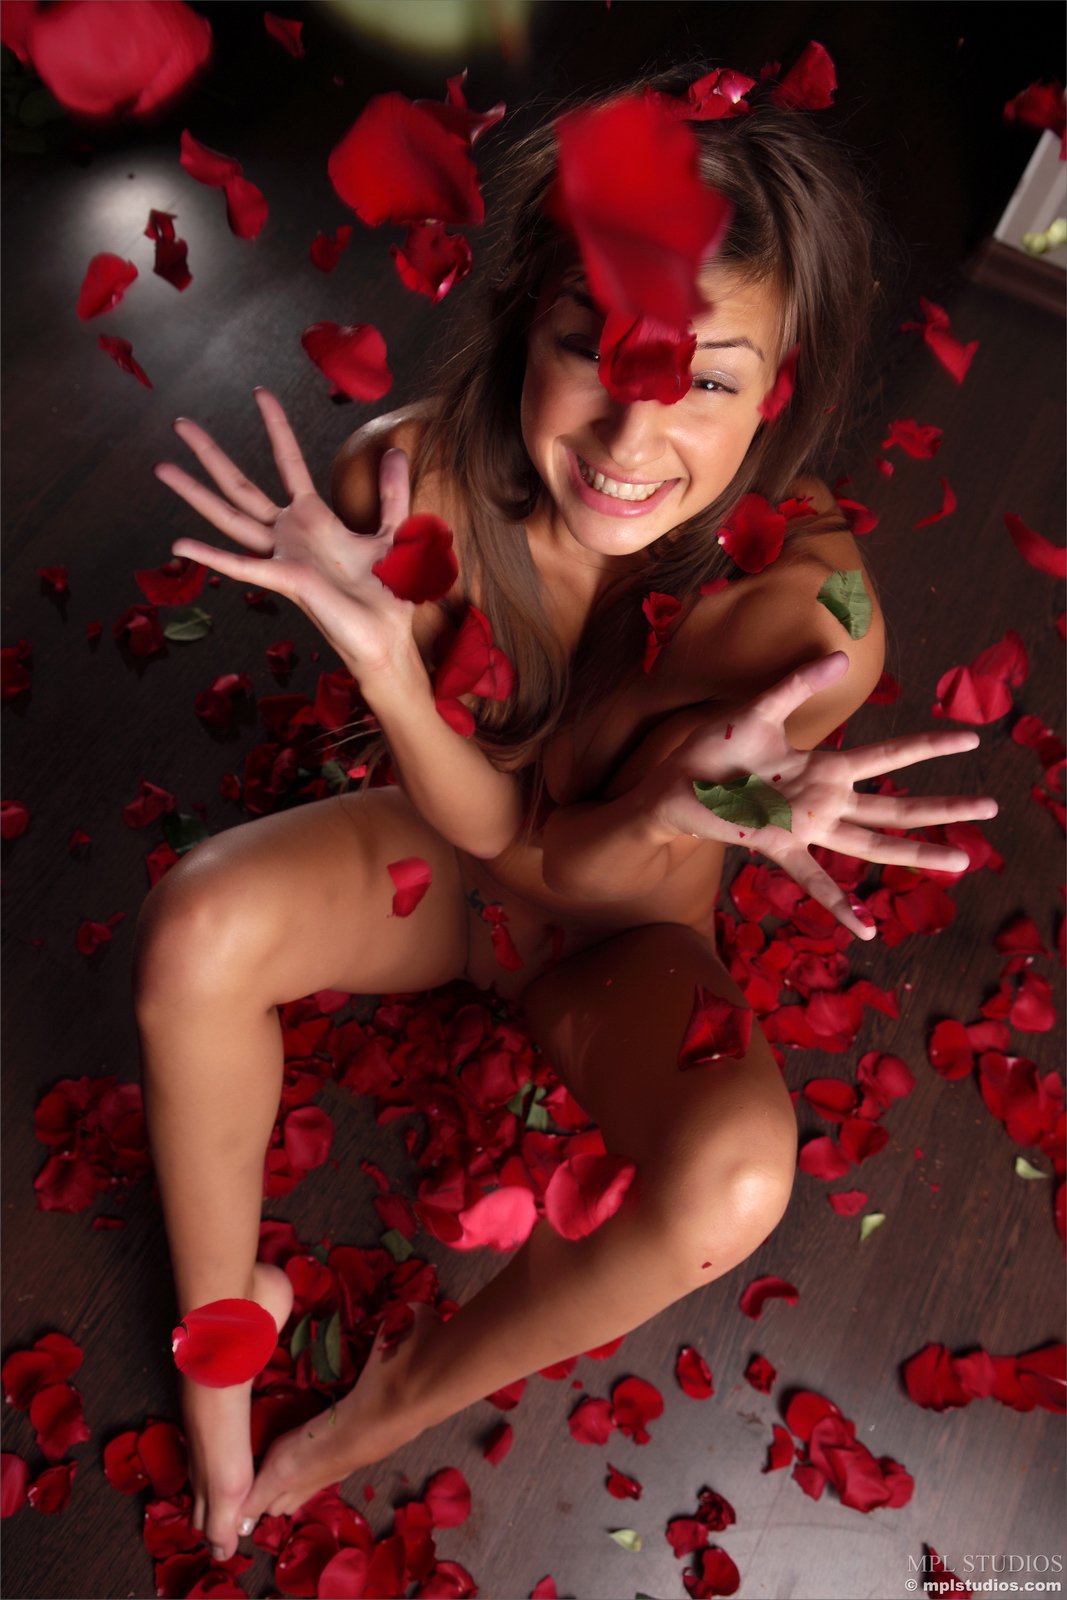 tara-naked-girl-red-roses-floor-mplstudios-25